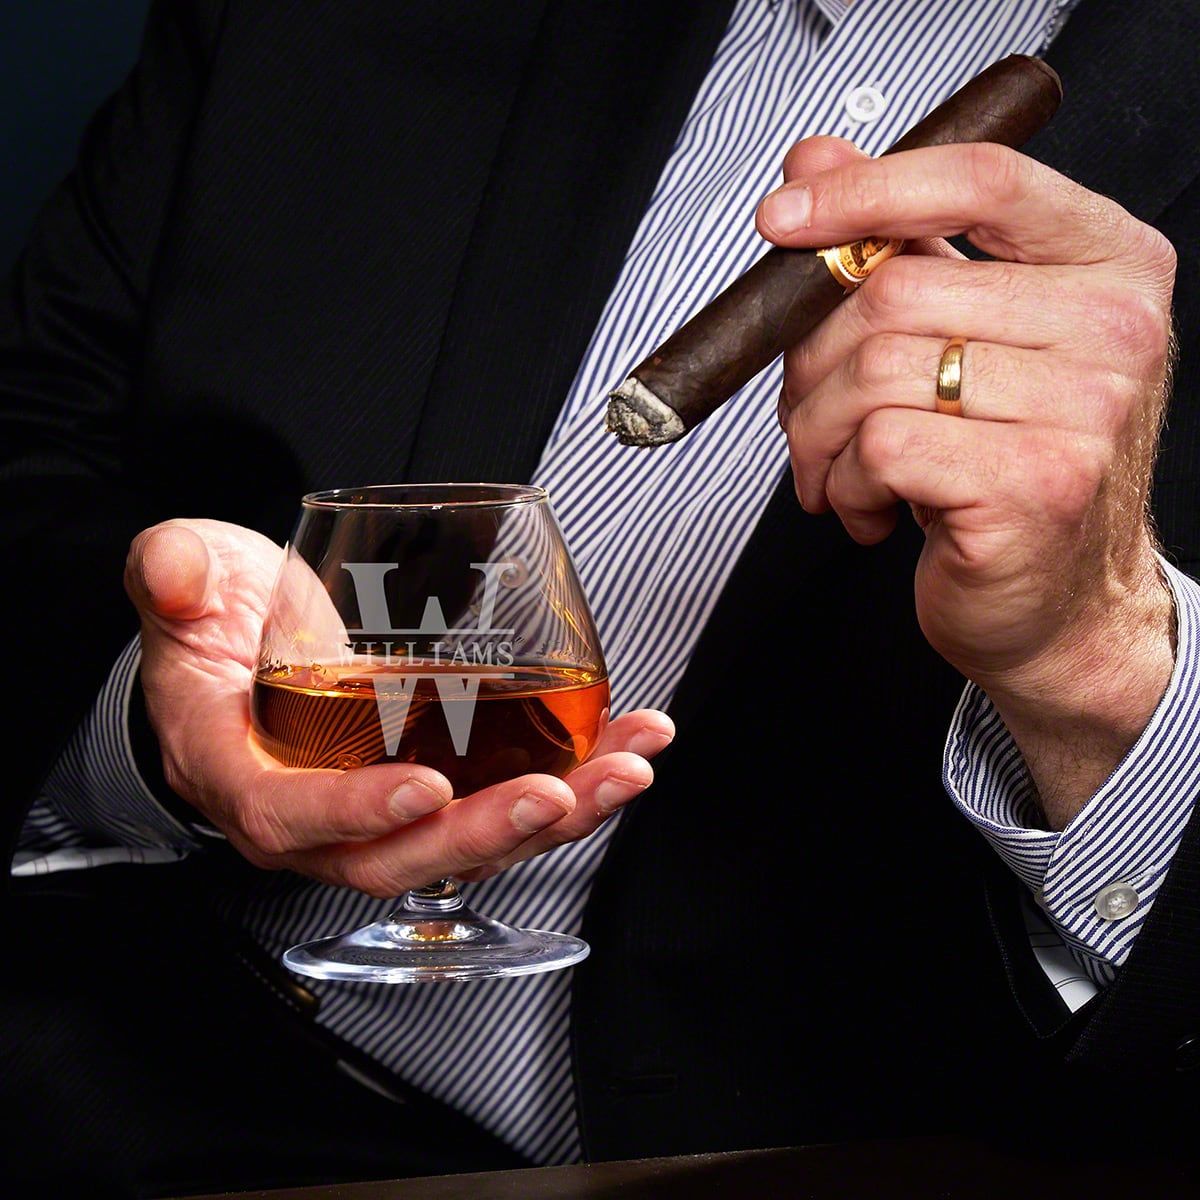 Custom Cognac Gift Set with Cigar Accessories